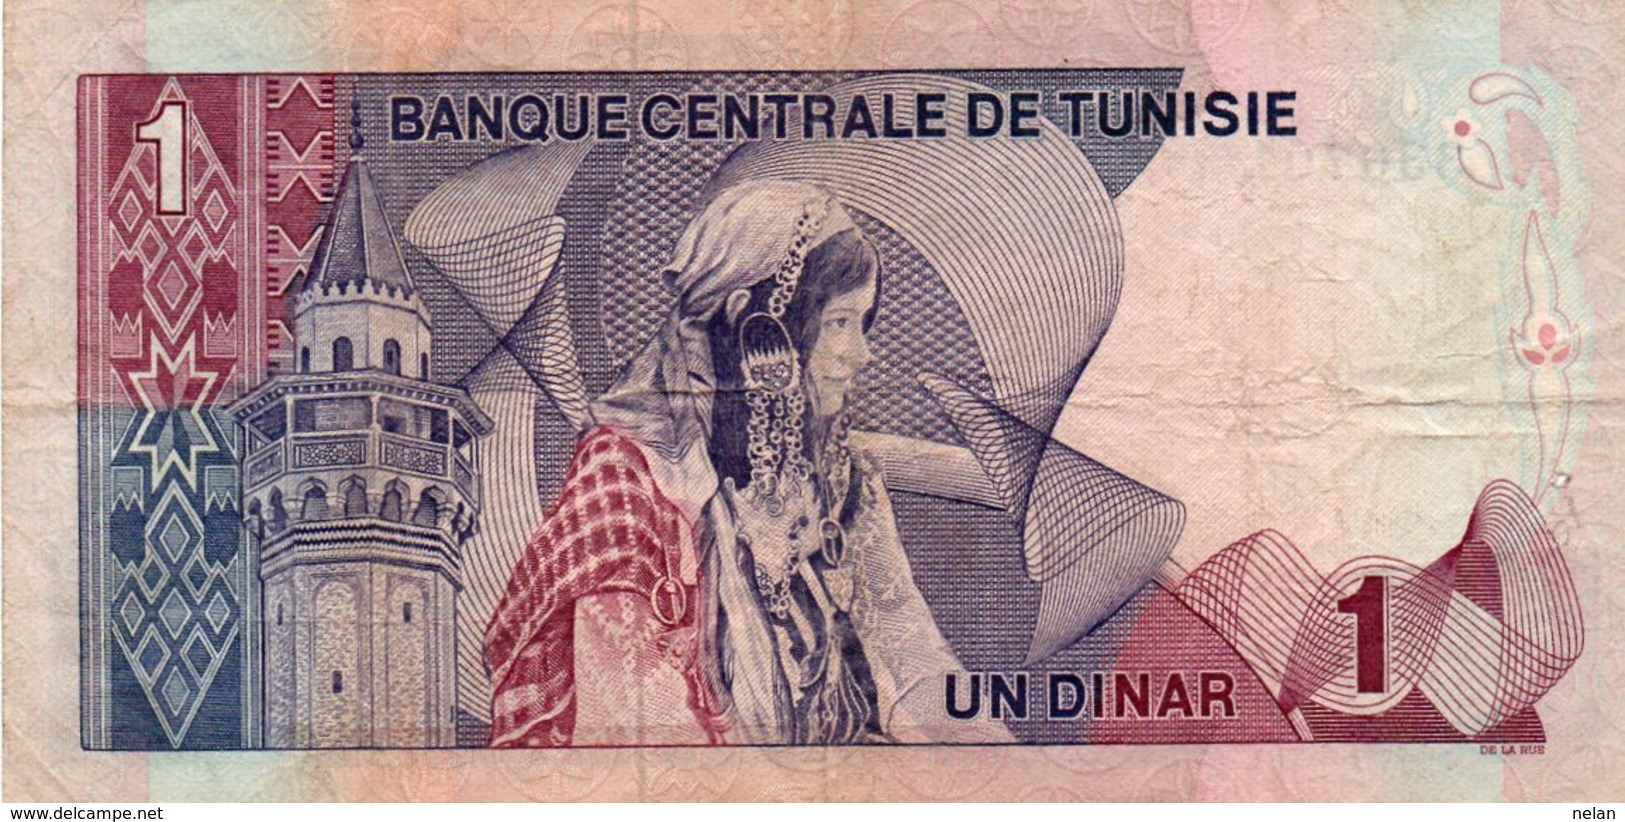 TUNISIA 1 DINAR 1972 P-67a CIRC.  SERIE 330701 - West African States